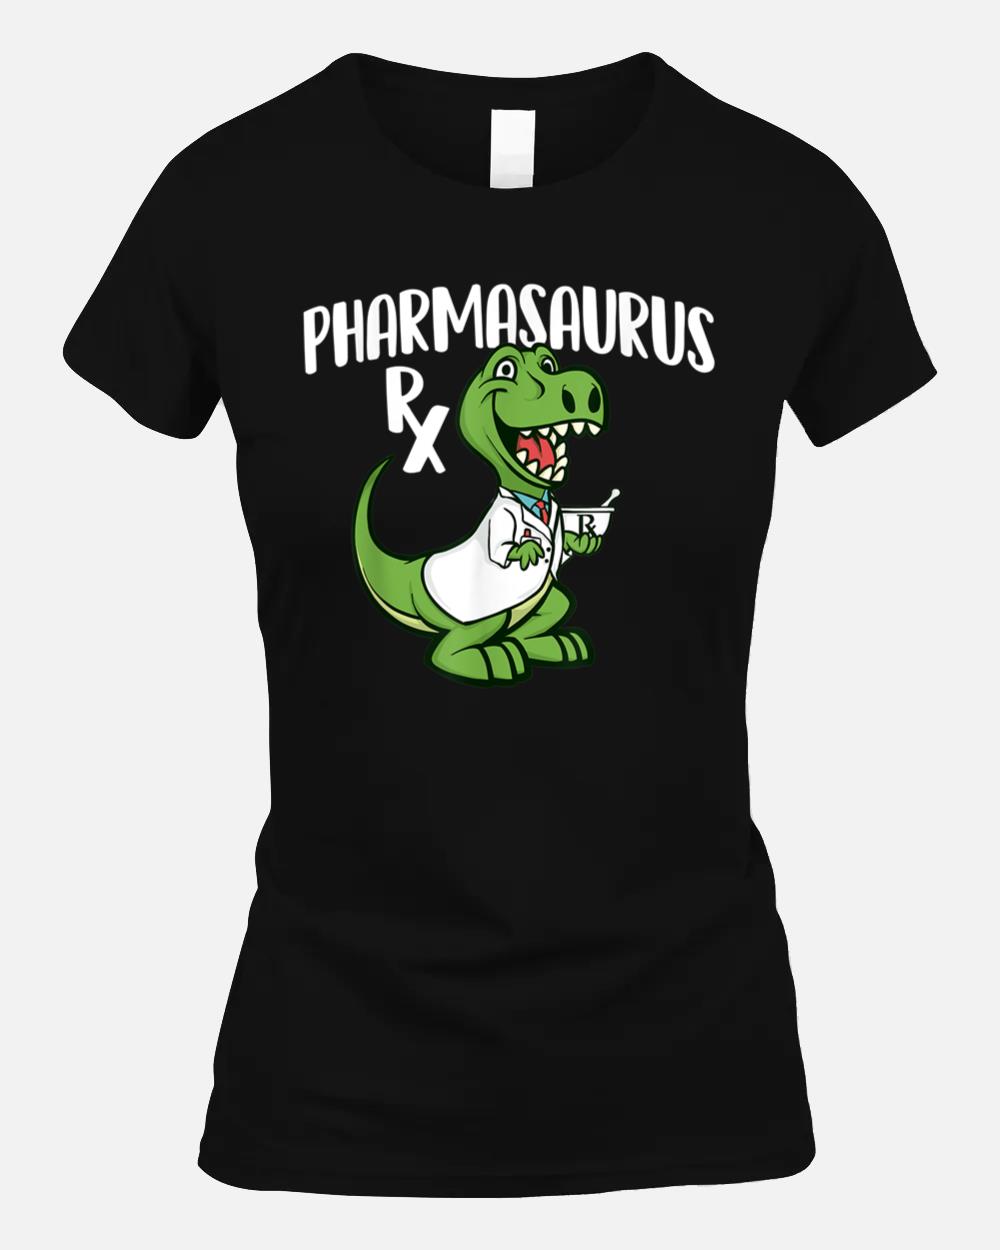 Pharmasaurus Rx - Pharmacist Pharmacy Technician Apothecary Unisex T-Shirt